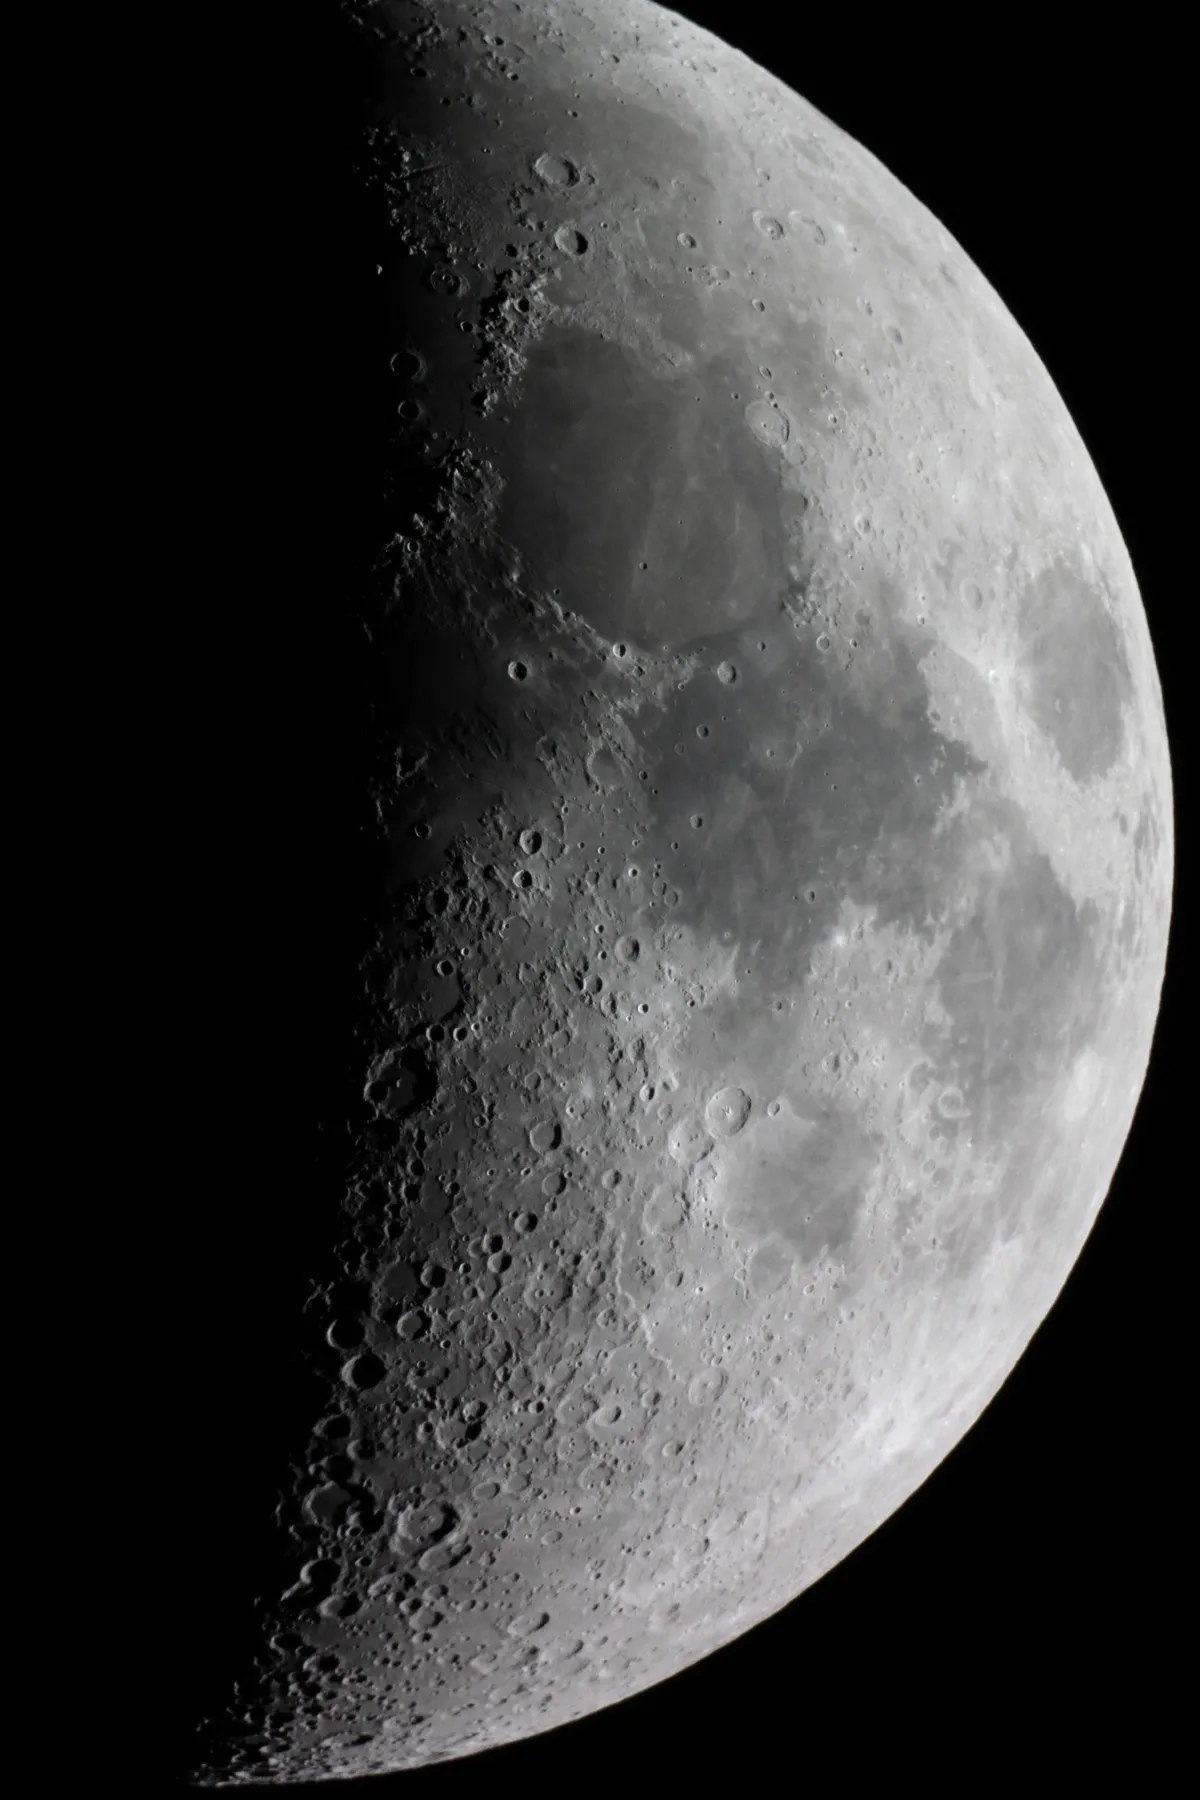 Moon by David Burr, Wimborne, UK. Equipment: Canon 450d, Adapter